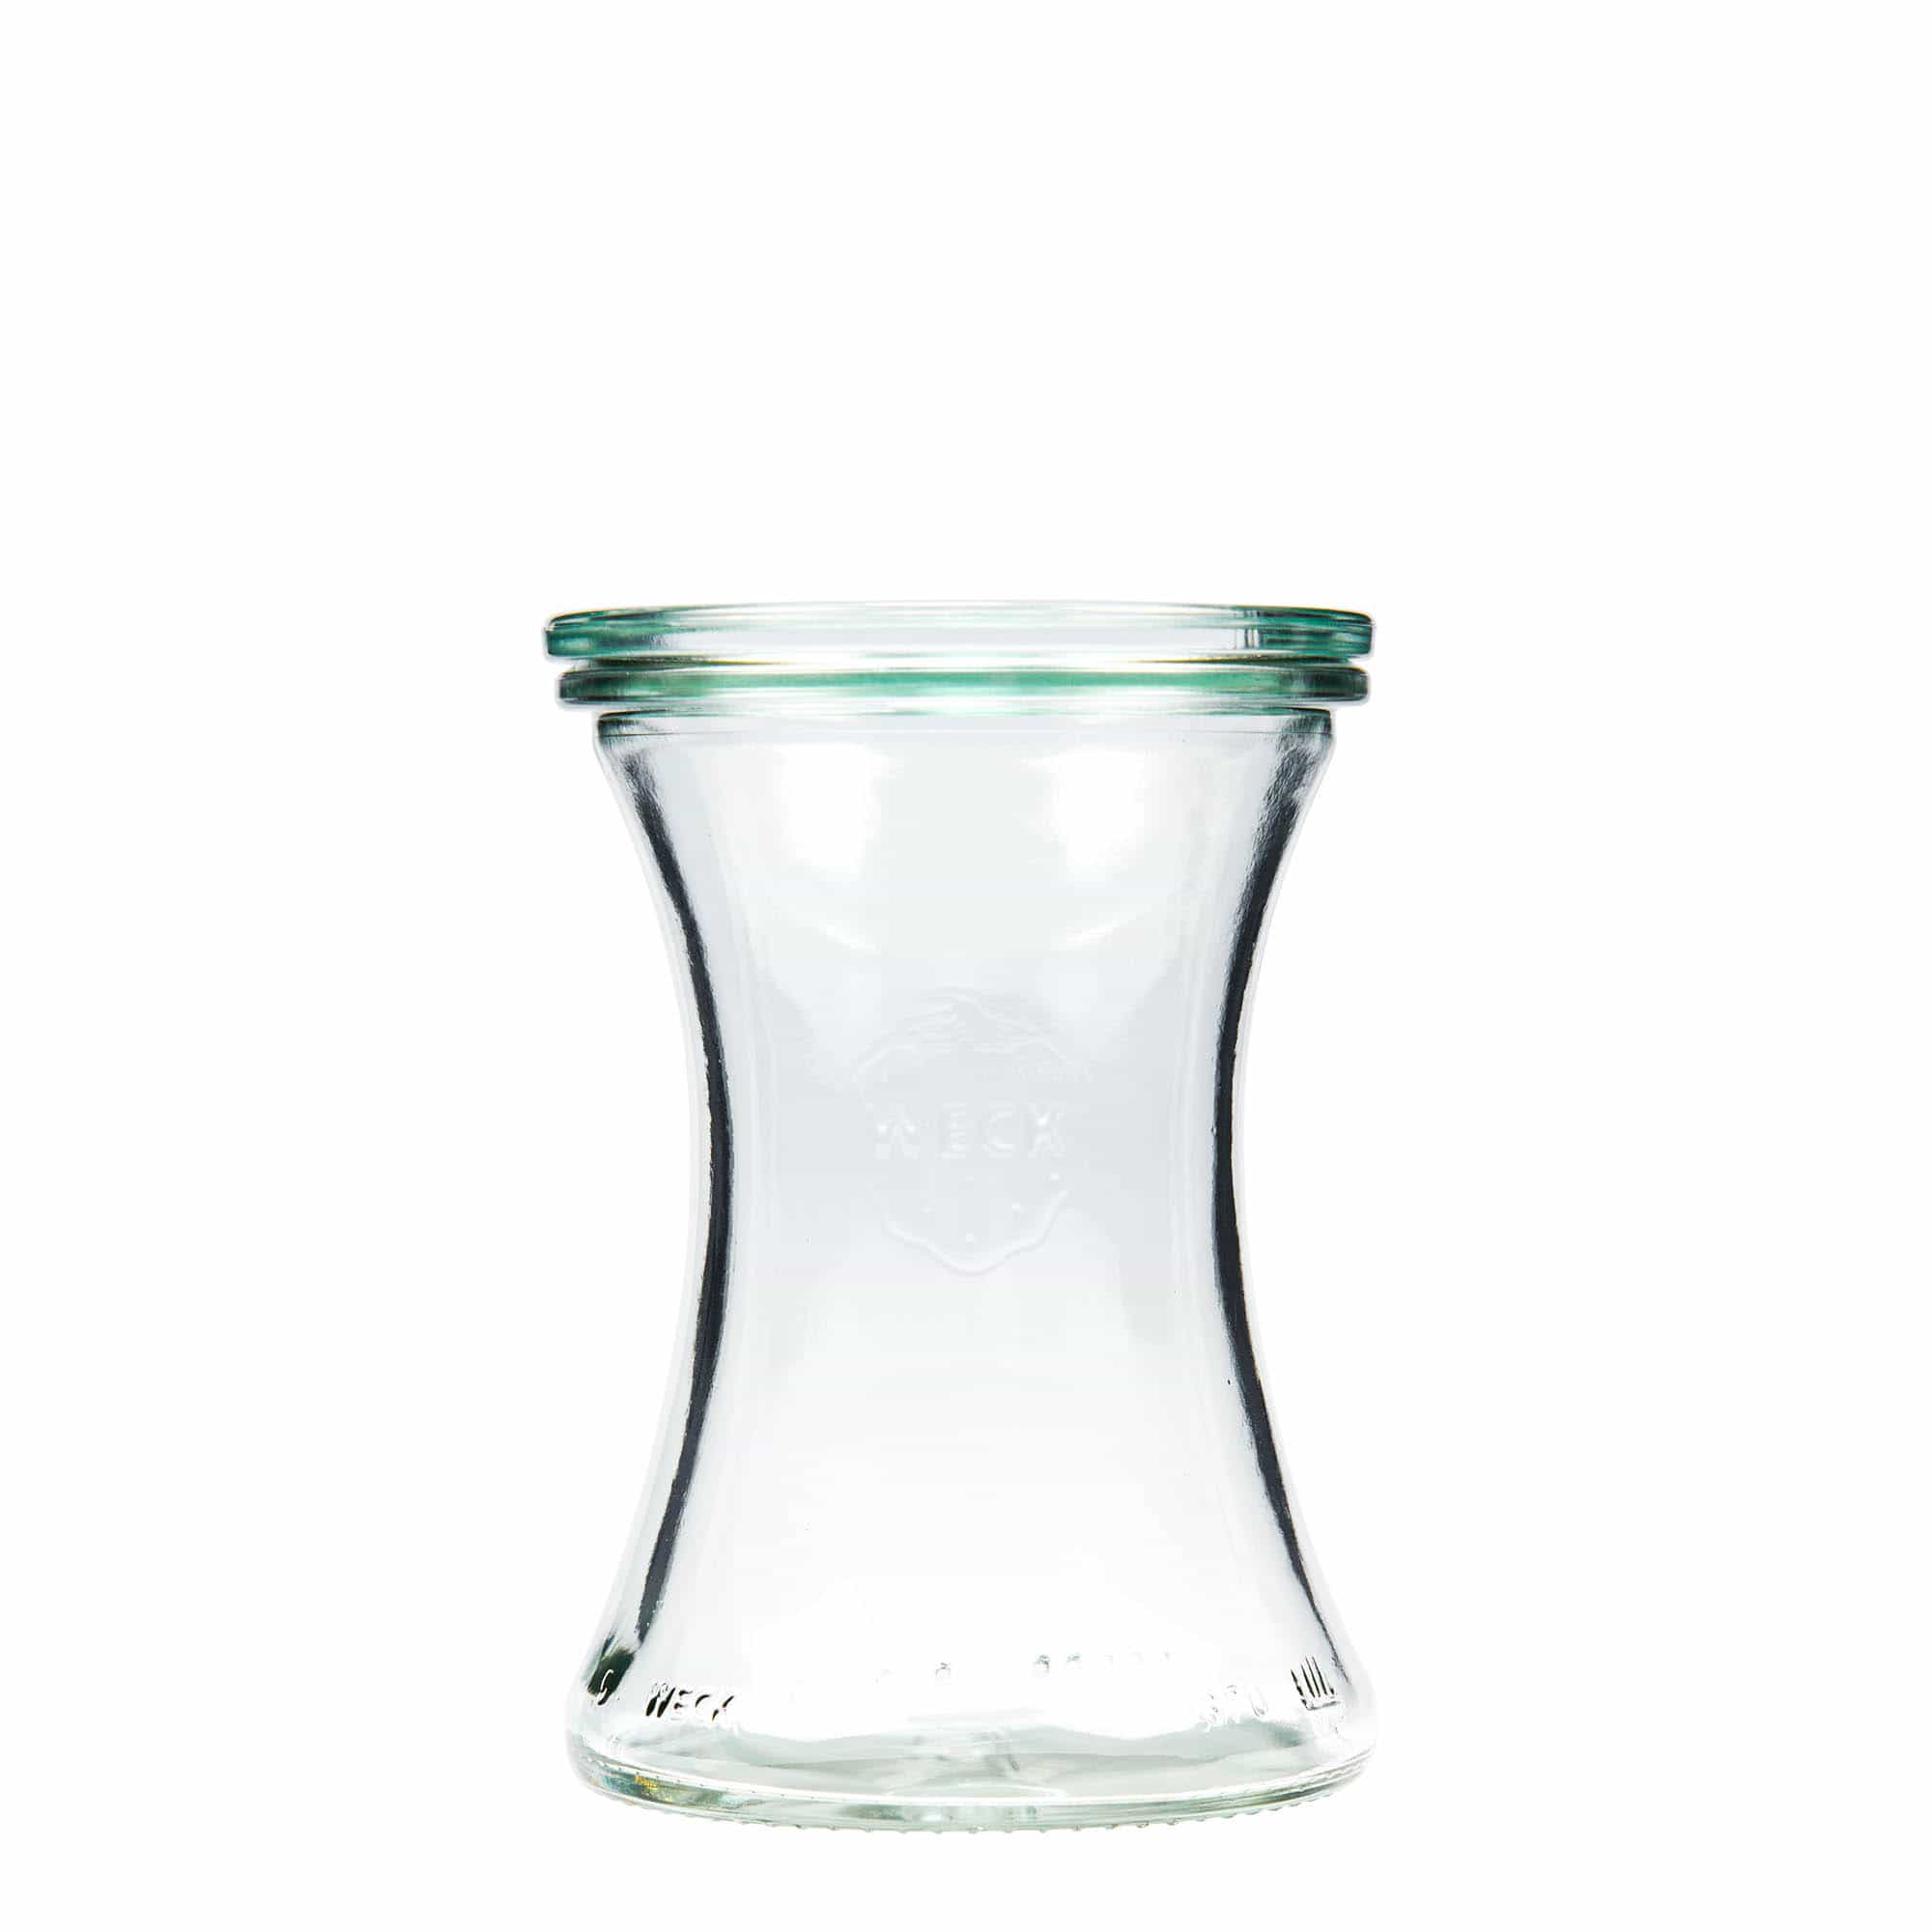 370 ml WECK deli jar, closure: round rim